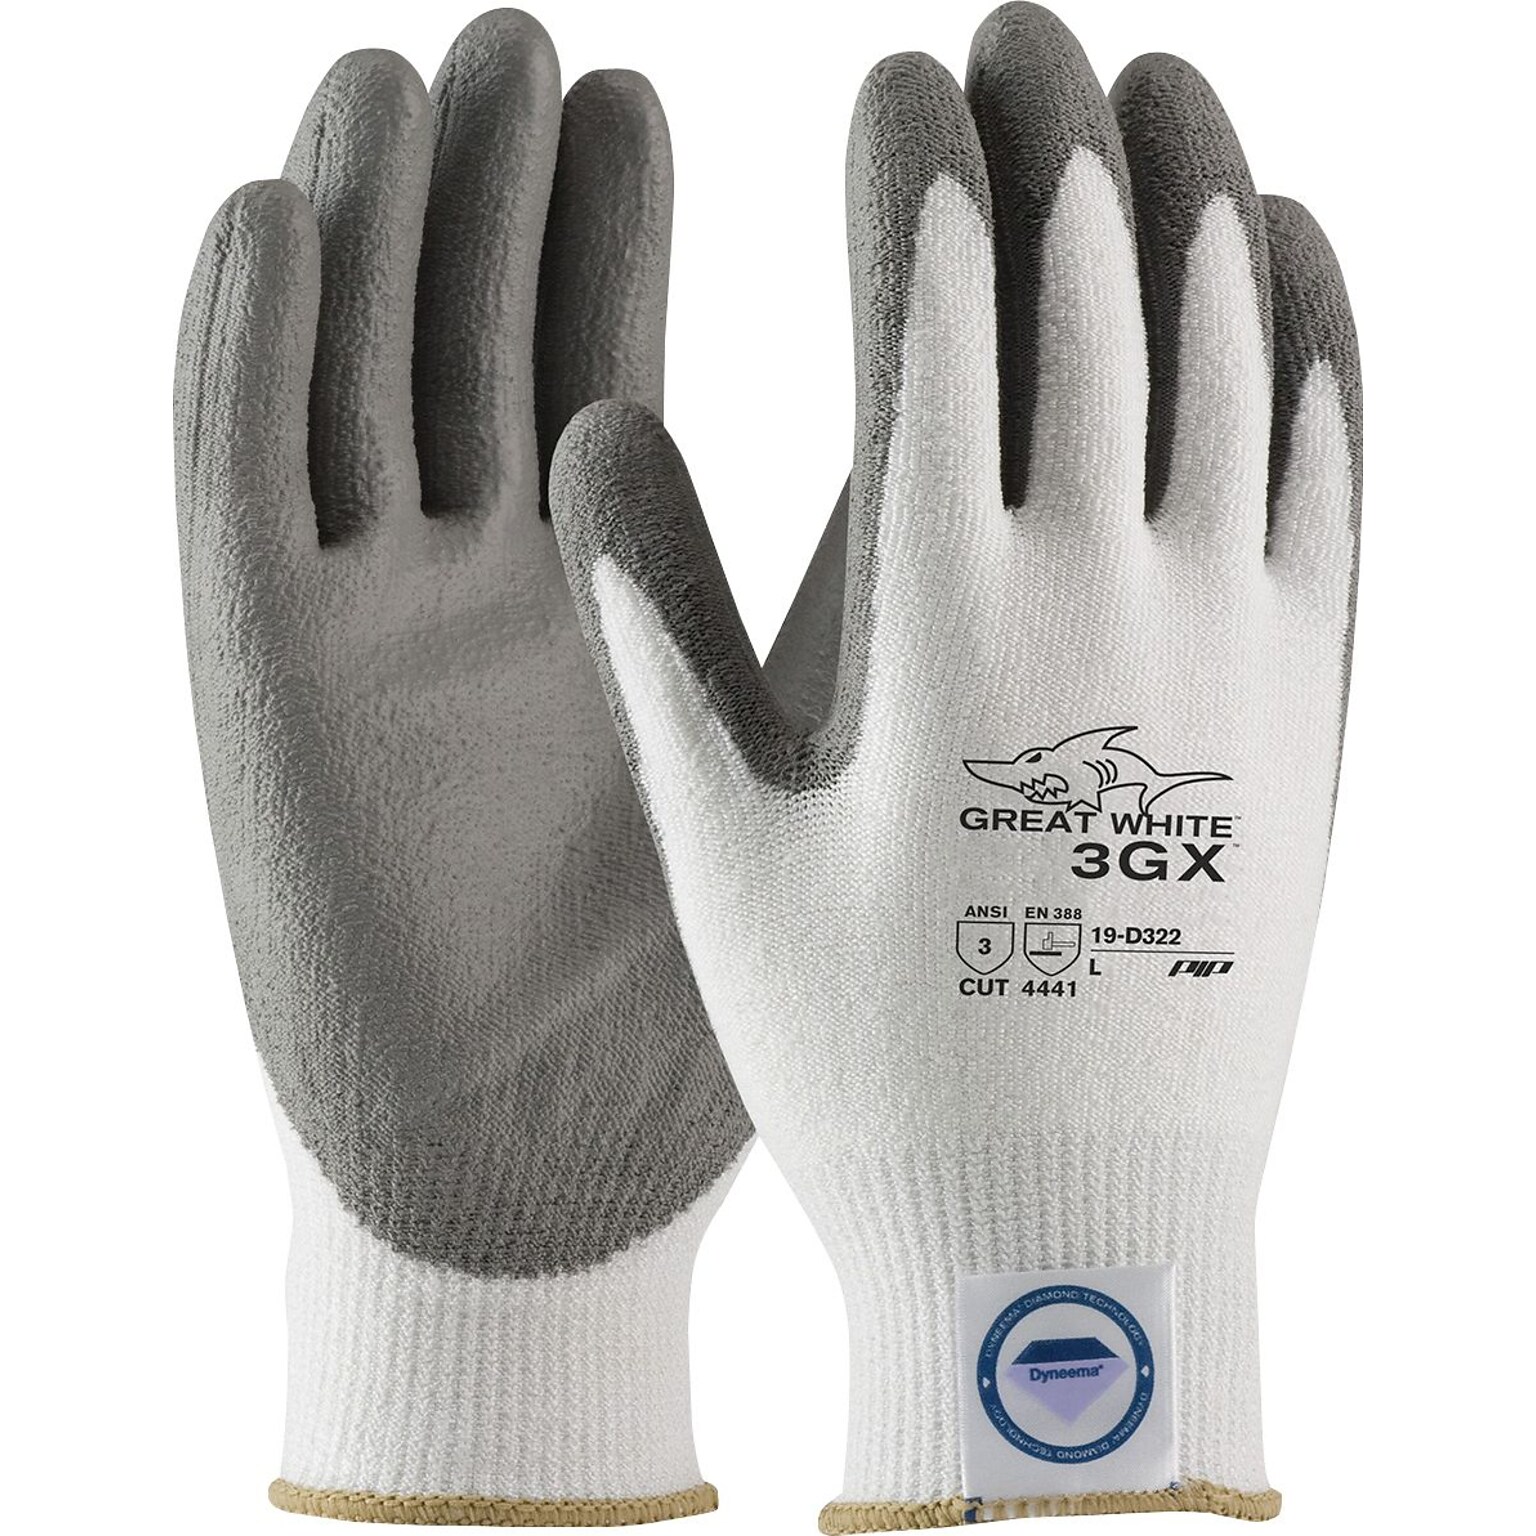 PIP Great White Dyneema Diamond/Lycra 3GX™ Cut-Resistant Polyurethane Coated Gloves, Medium, White/Gray (19-D322/M)